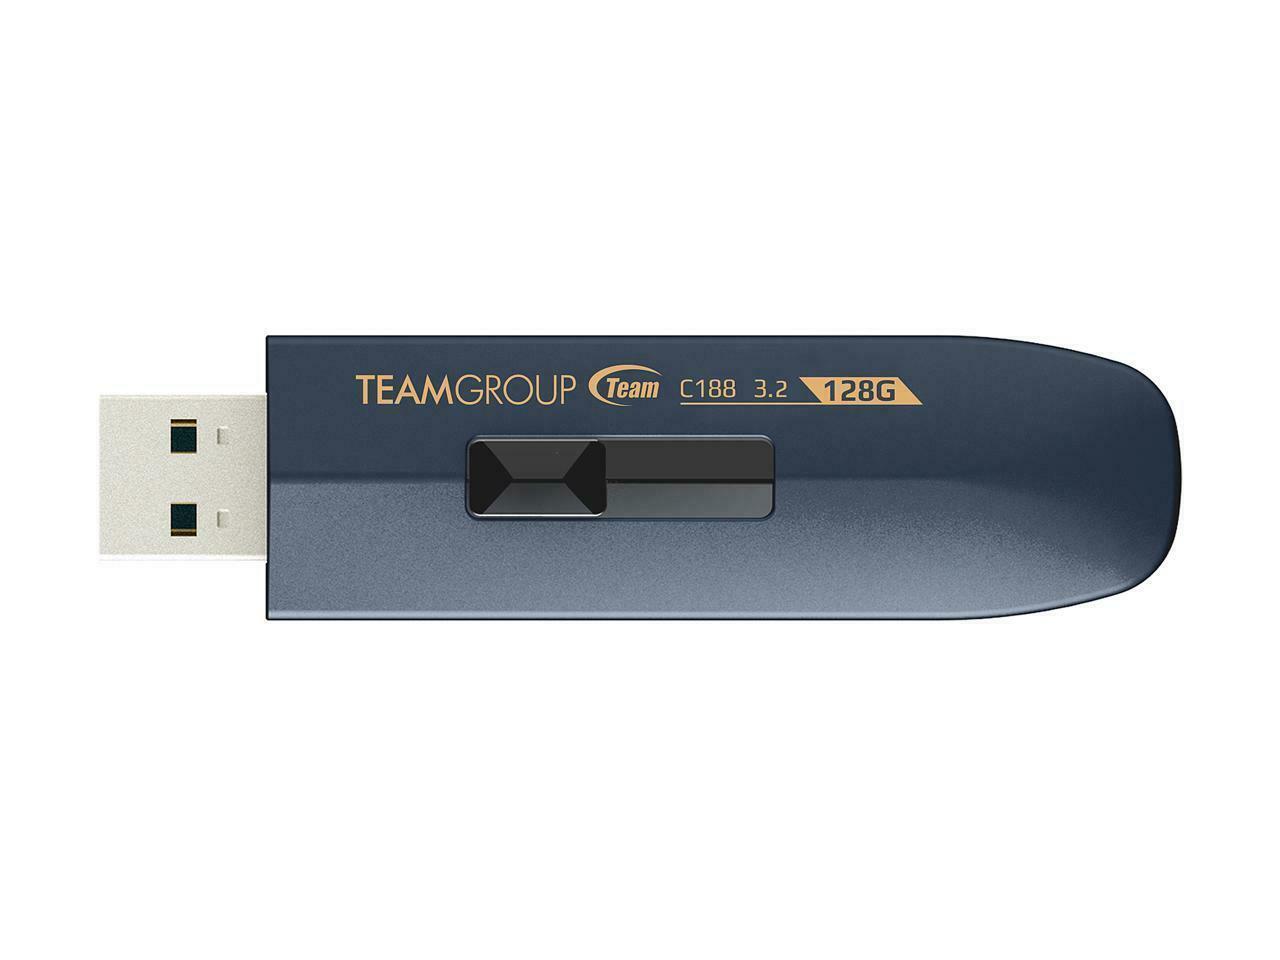 128GB Team C188 USB 3.2 Flash Drive for $9.99 Shipped